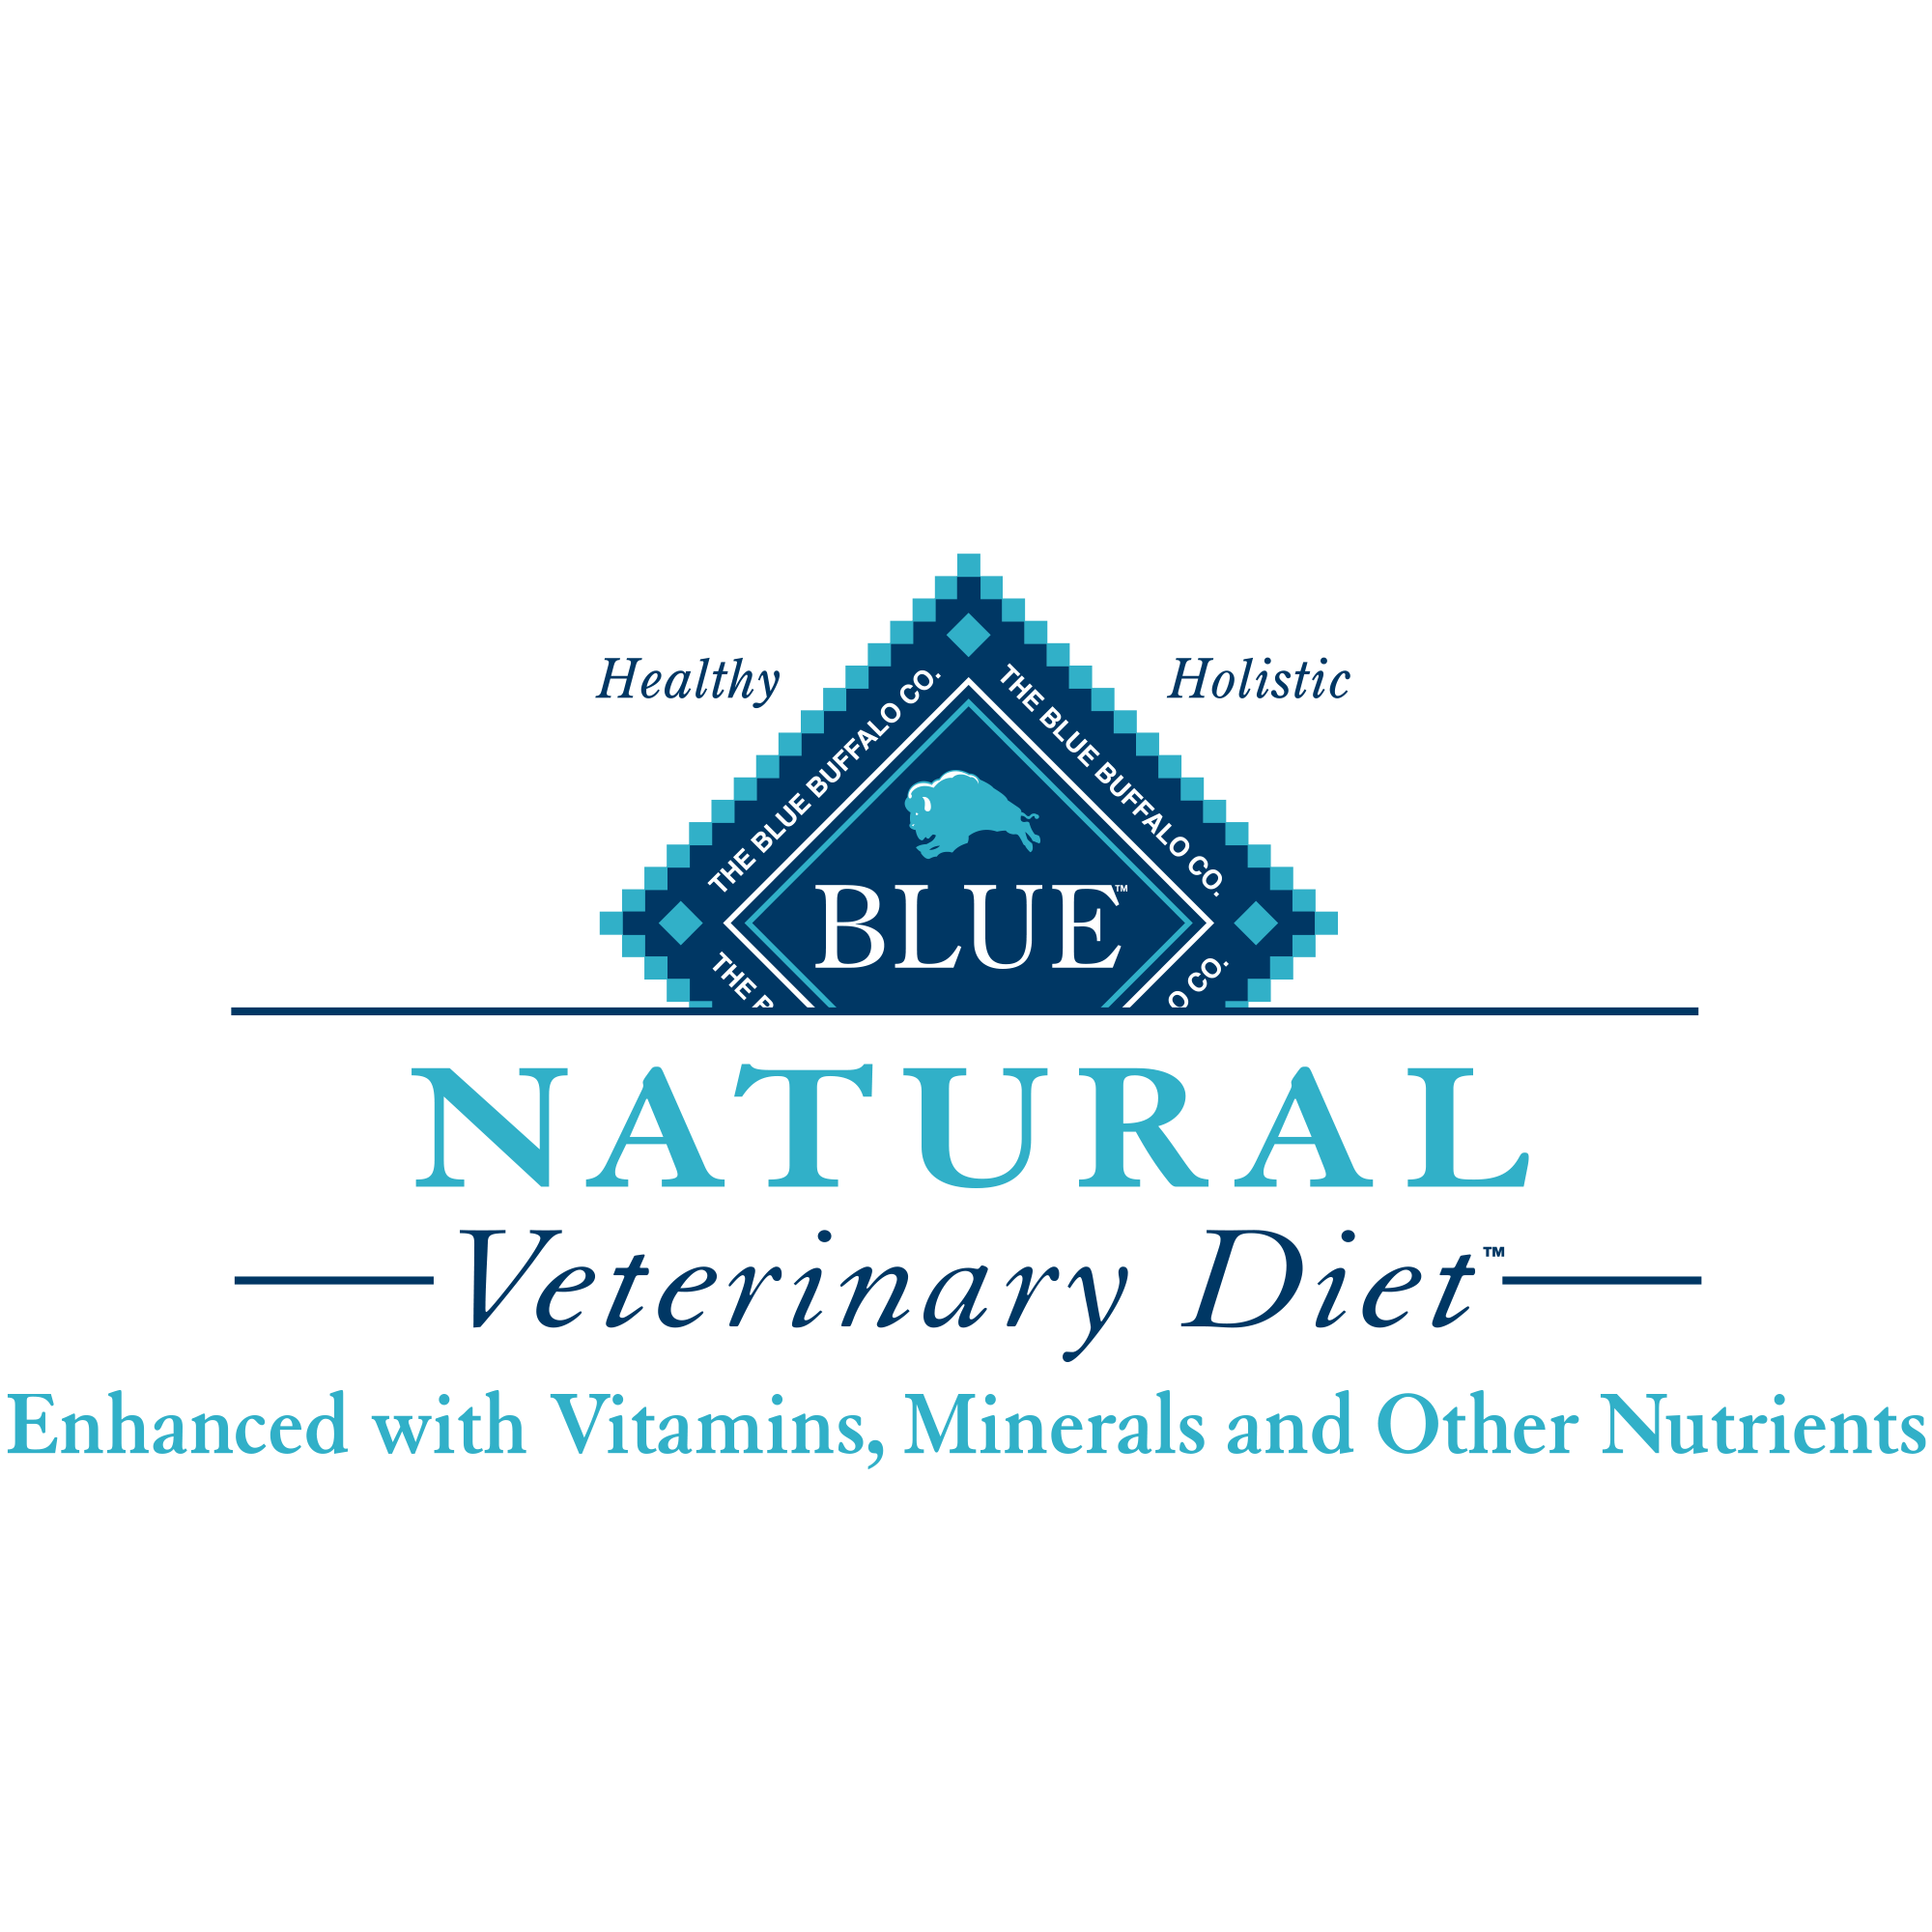 Blue Buffalo Natural Veterinary Diets logo